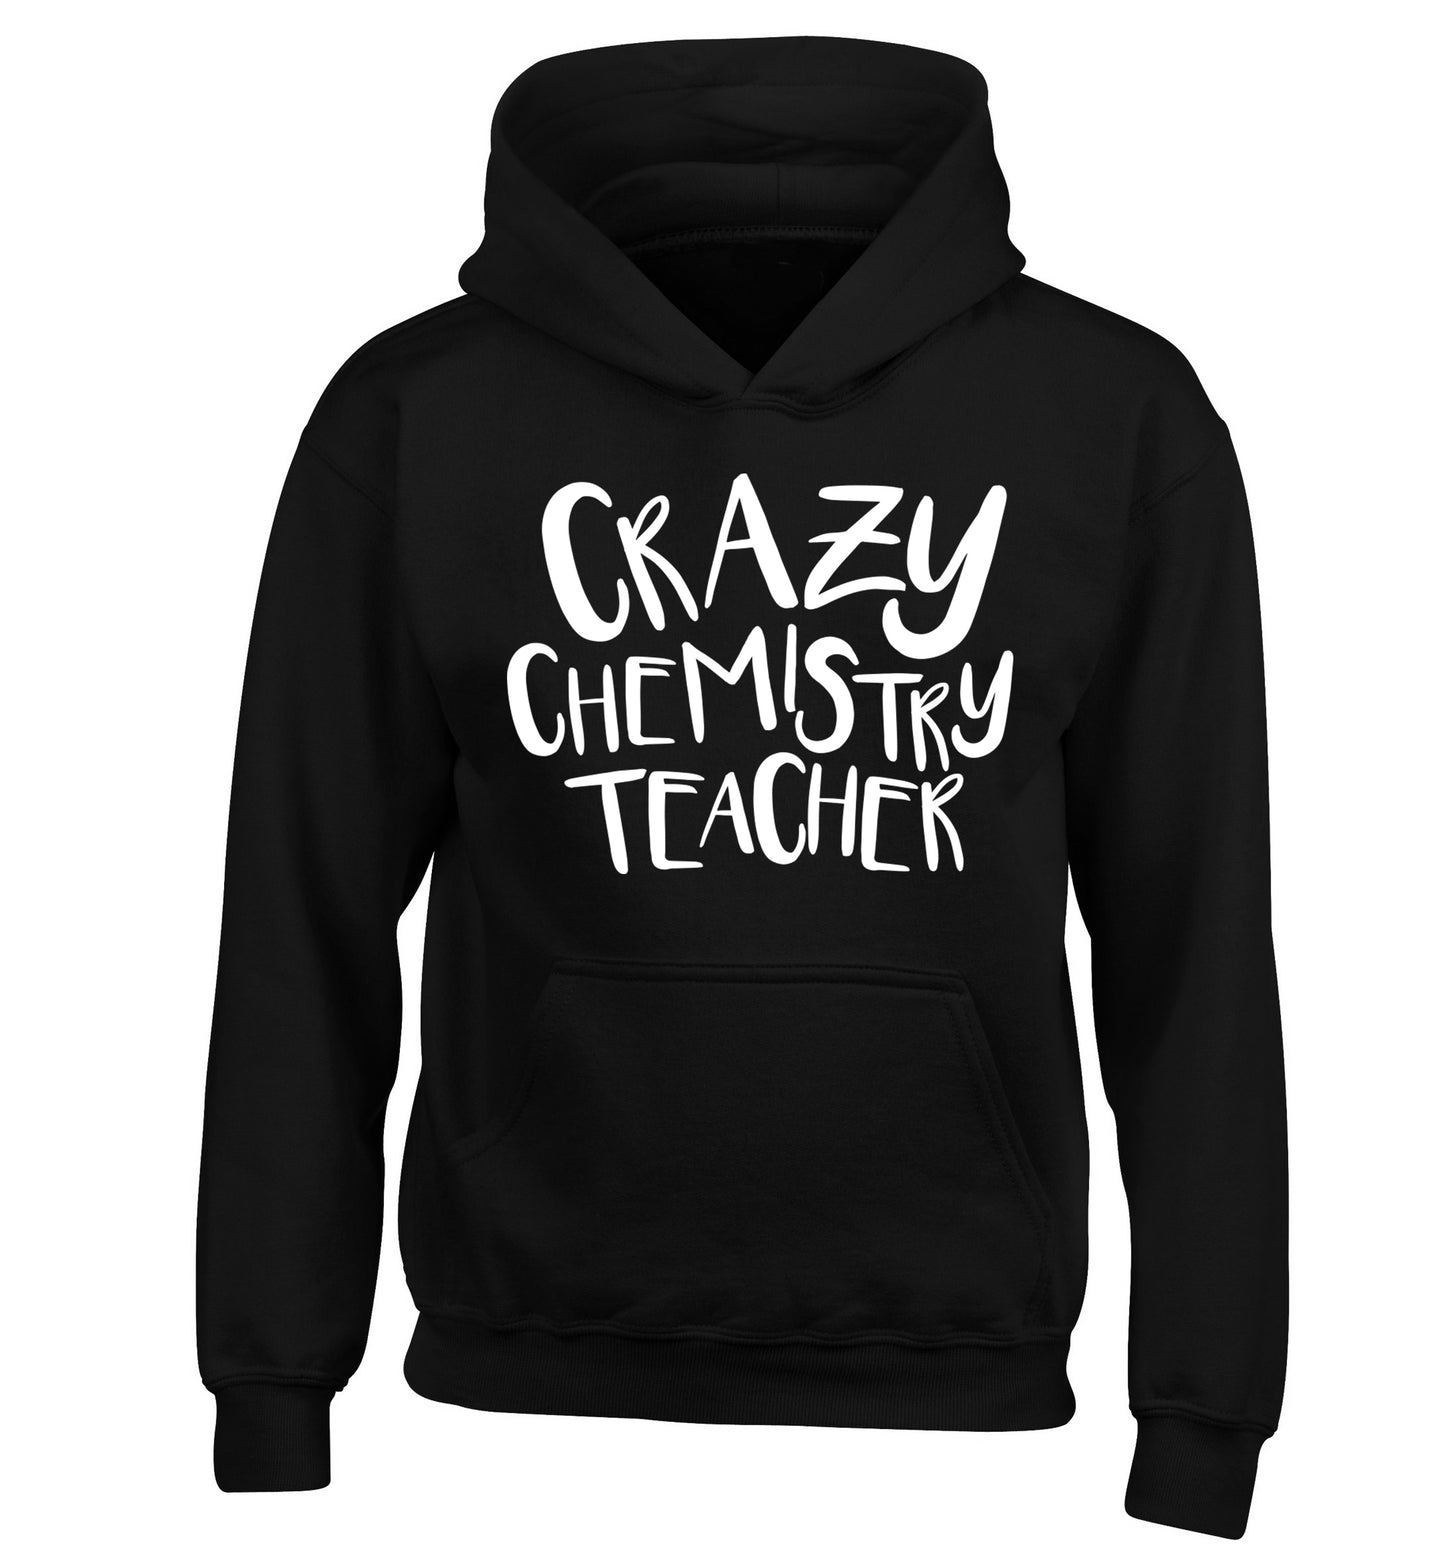 Crazy chemistry teacher children's black hoodie 12-13 Years